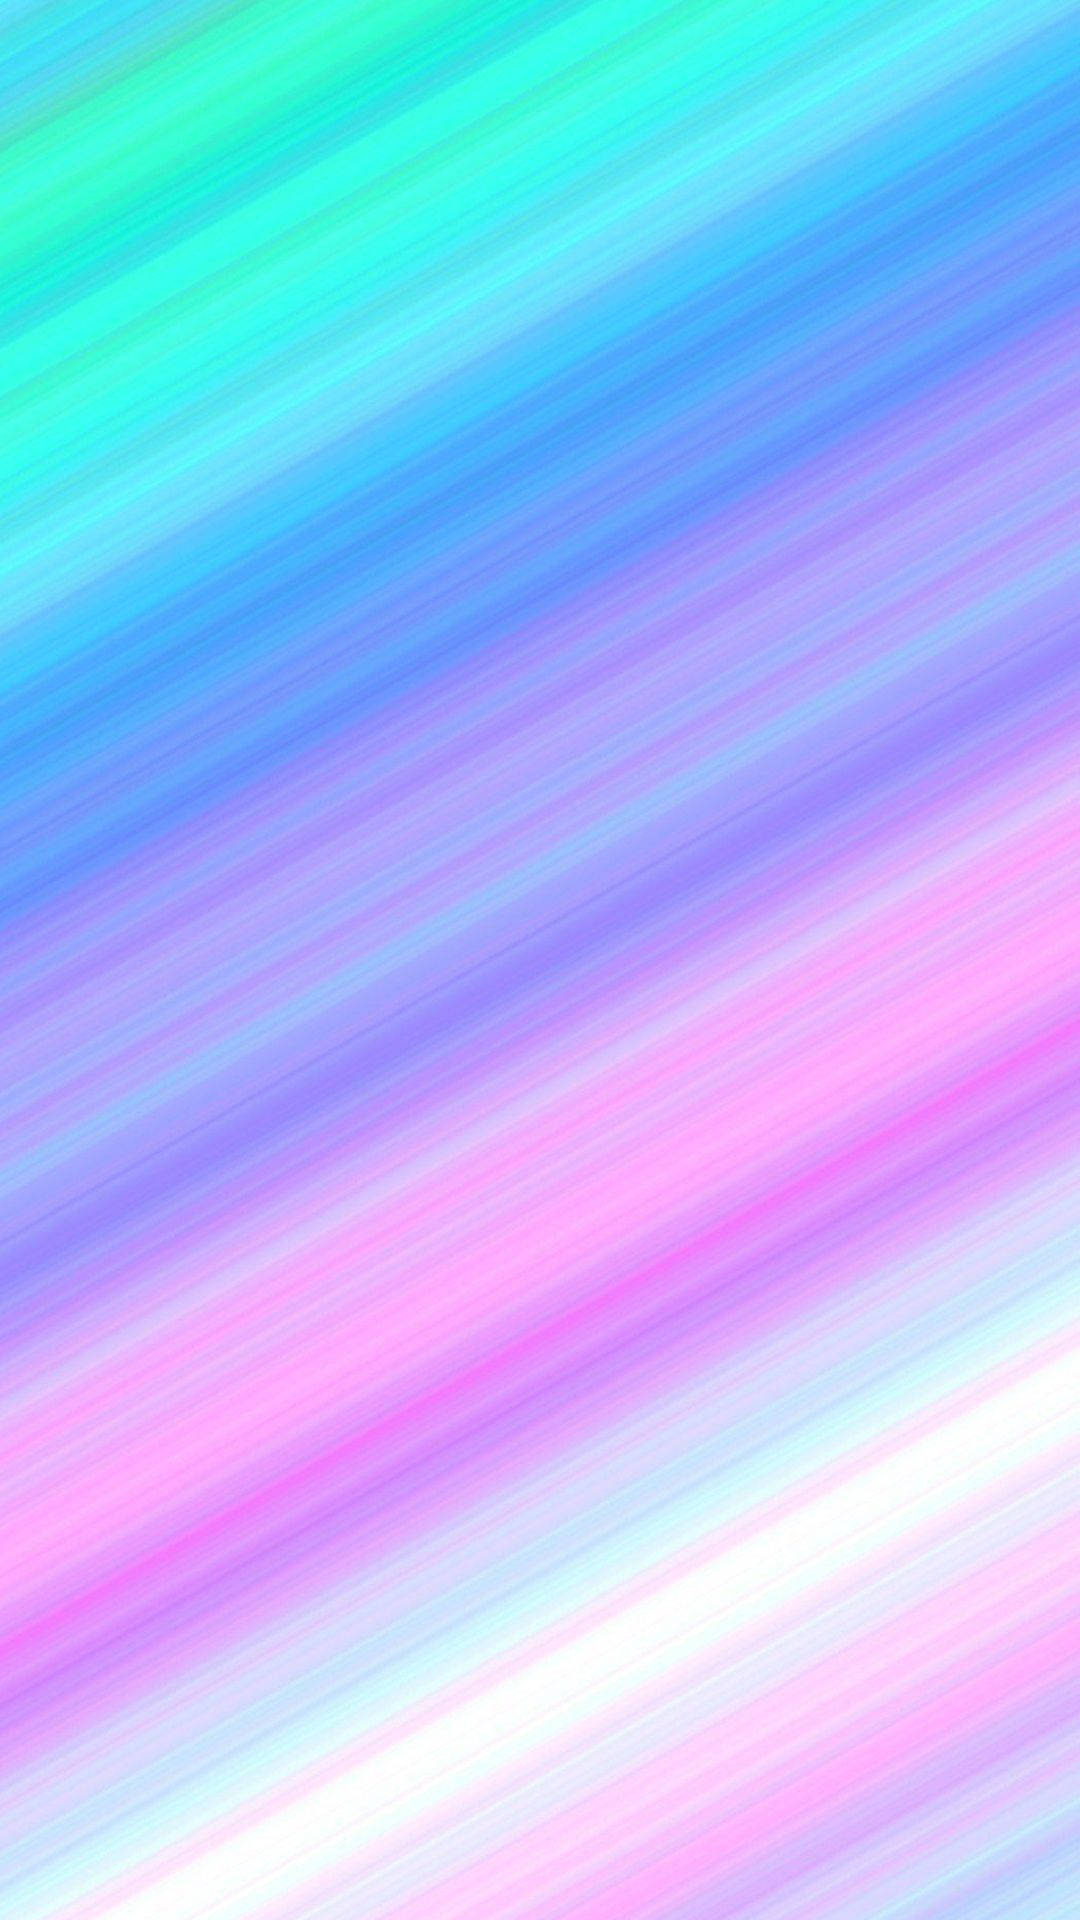 Pastel Colors Of Cute Galaxy Wallpaper